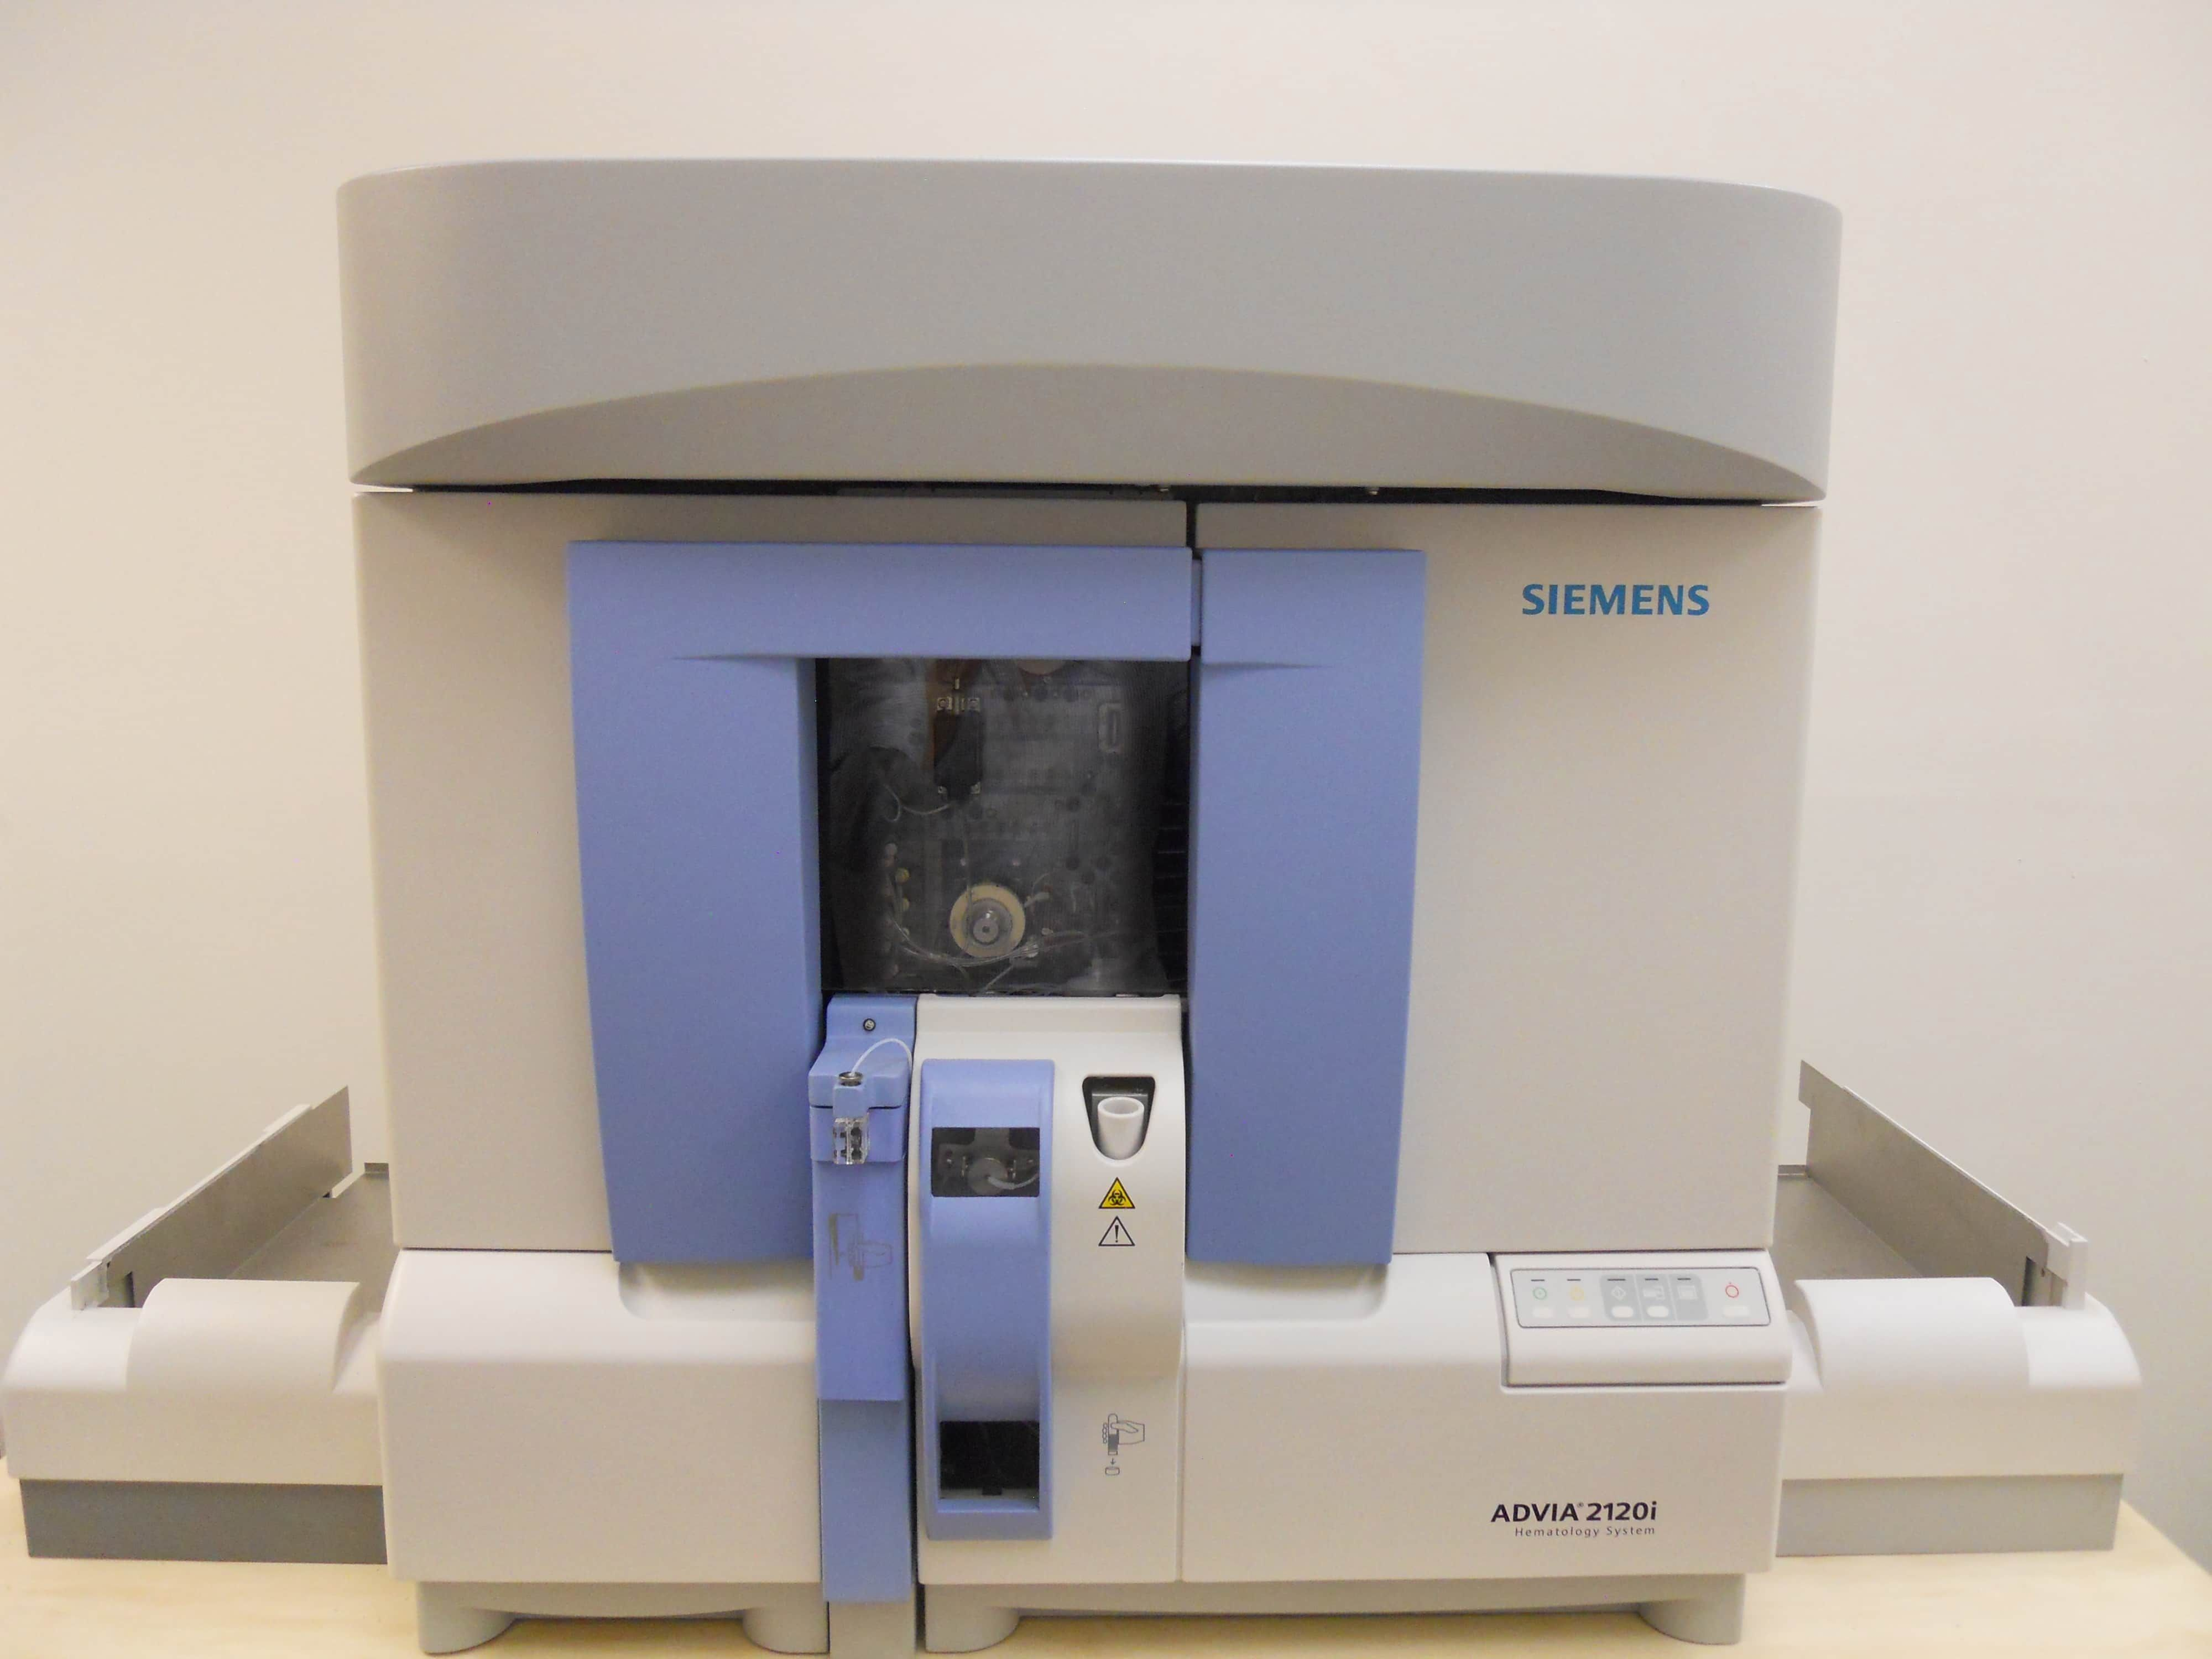 Siemens Advia 2120i Hematology Analyzer - Service and Support